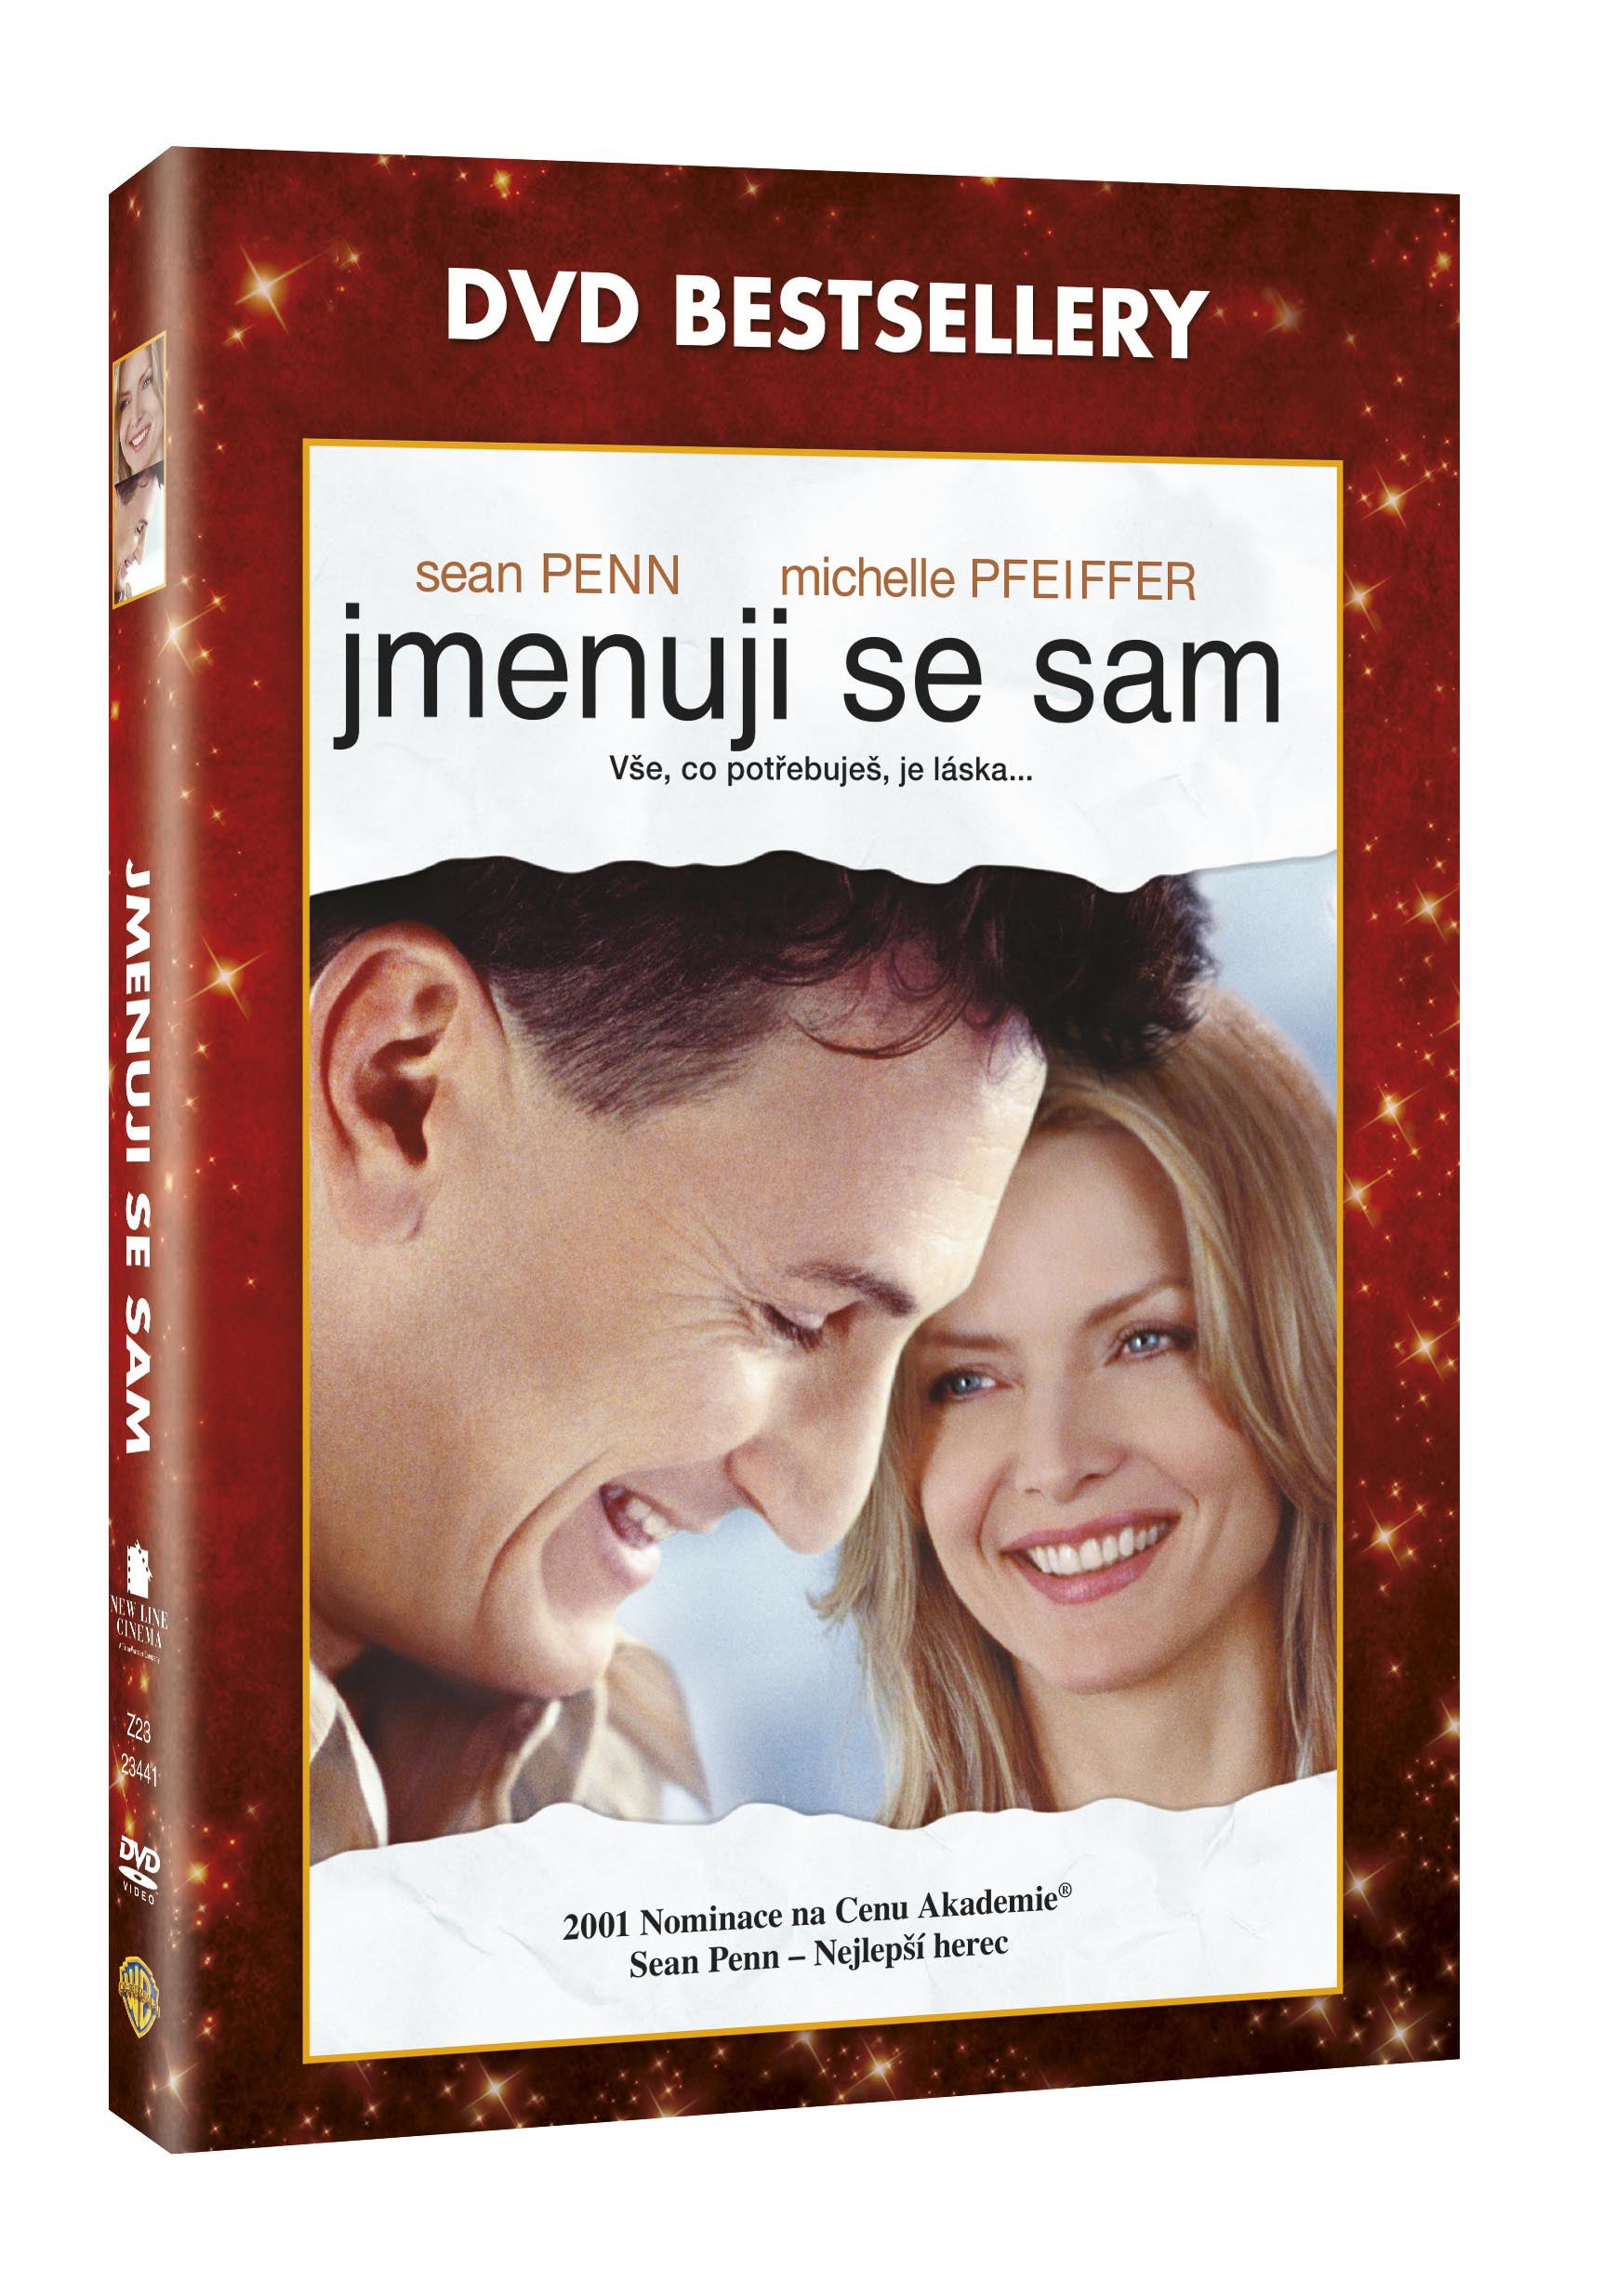 Jmenuji se Sam - DVD bestsellery (I Am Sam)